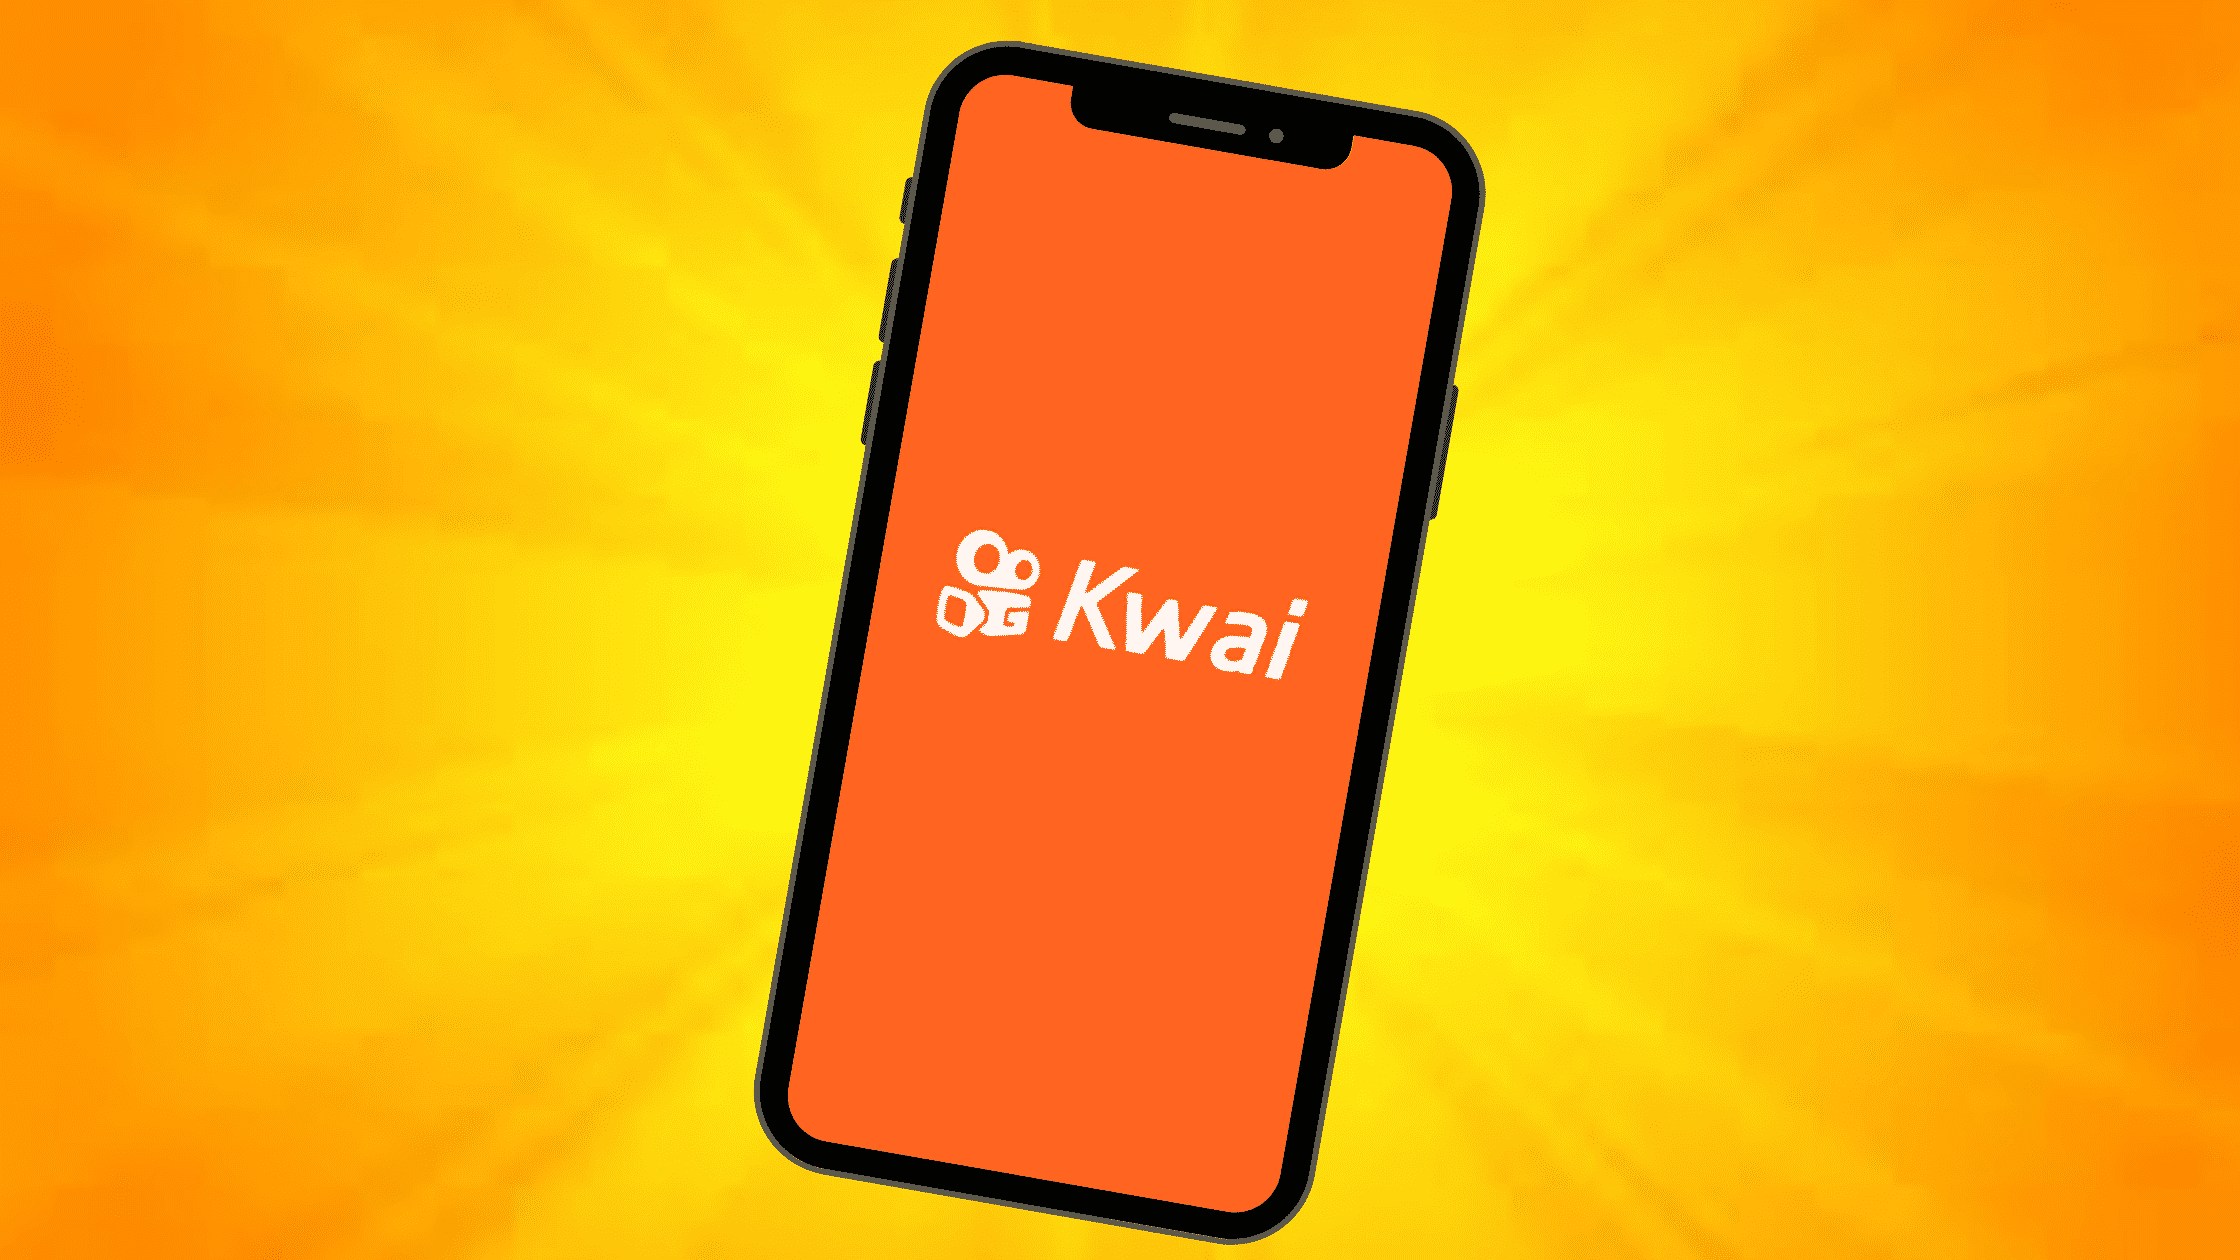 Kwai App na Tela do Smartphone Imagem JPG [download] - Designi